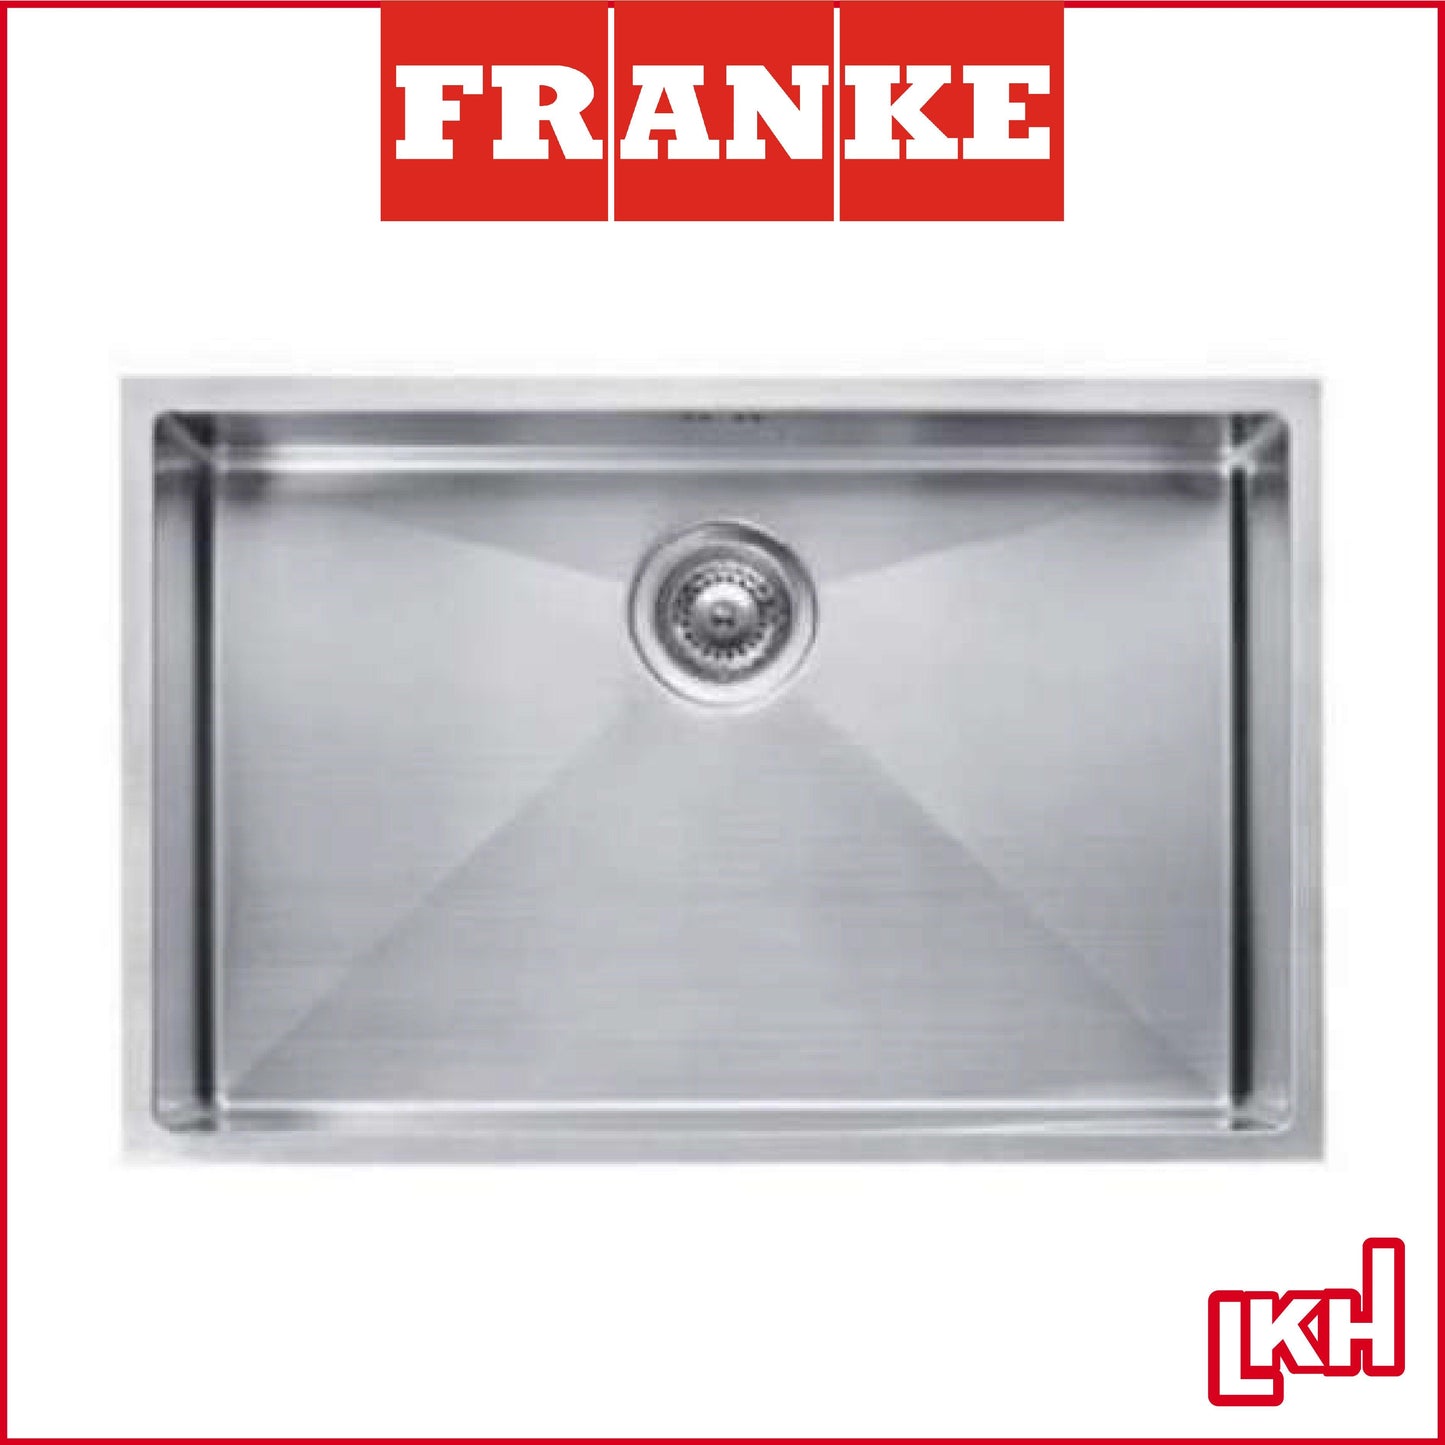 franke PZX 110-65 stainless steel single bowl kitchen sink